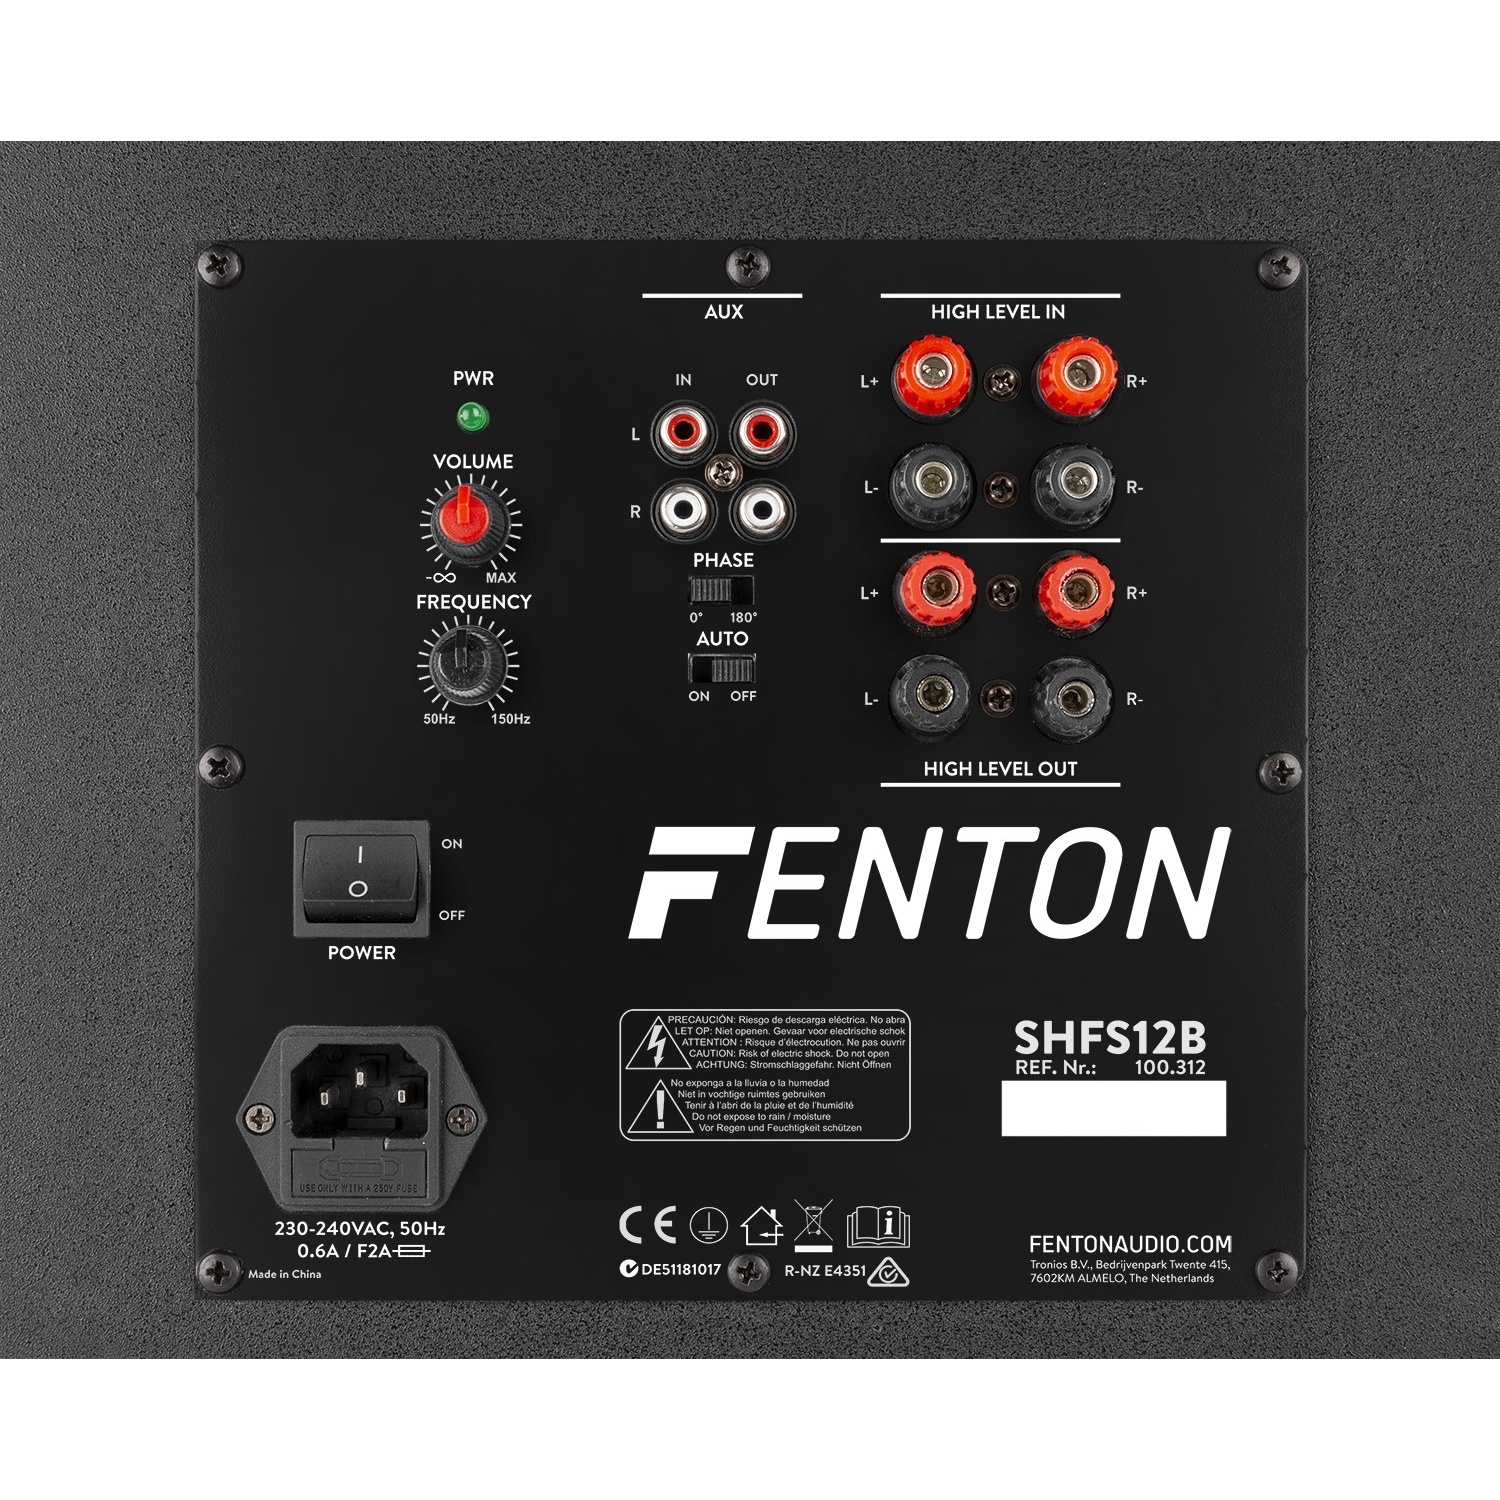 FENTON SHFS12B Αυτοενισχυόμενο SubWoofer 12" ισχύος 400 Watt Max 100.312